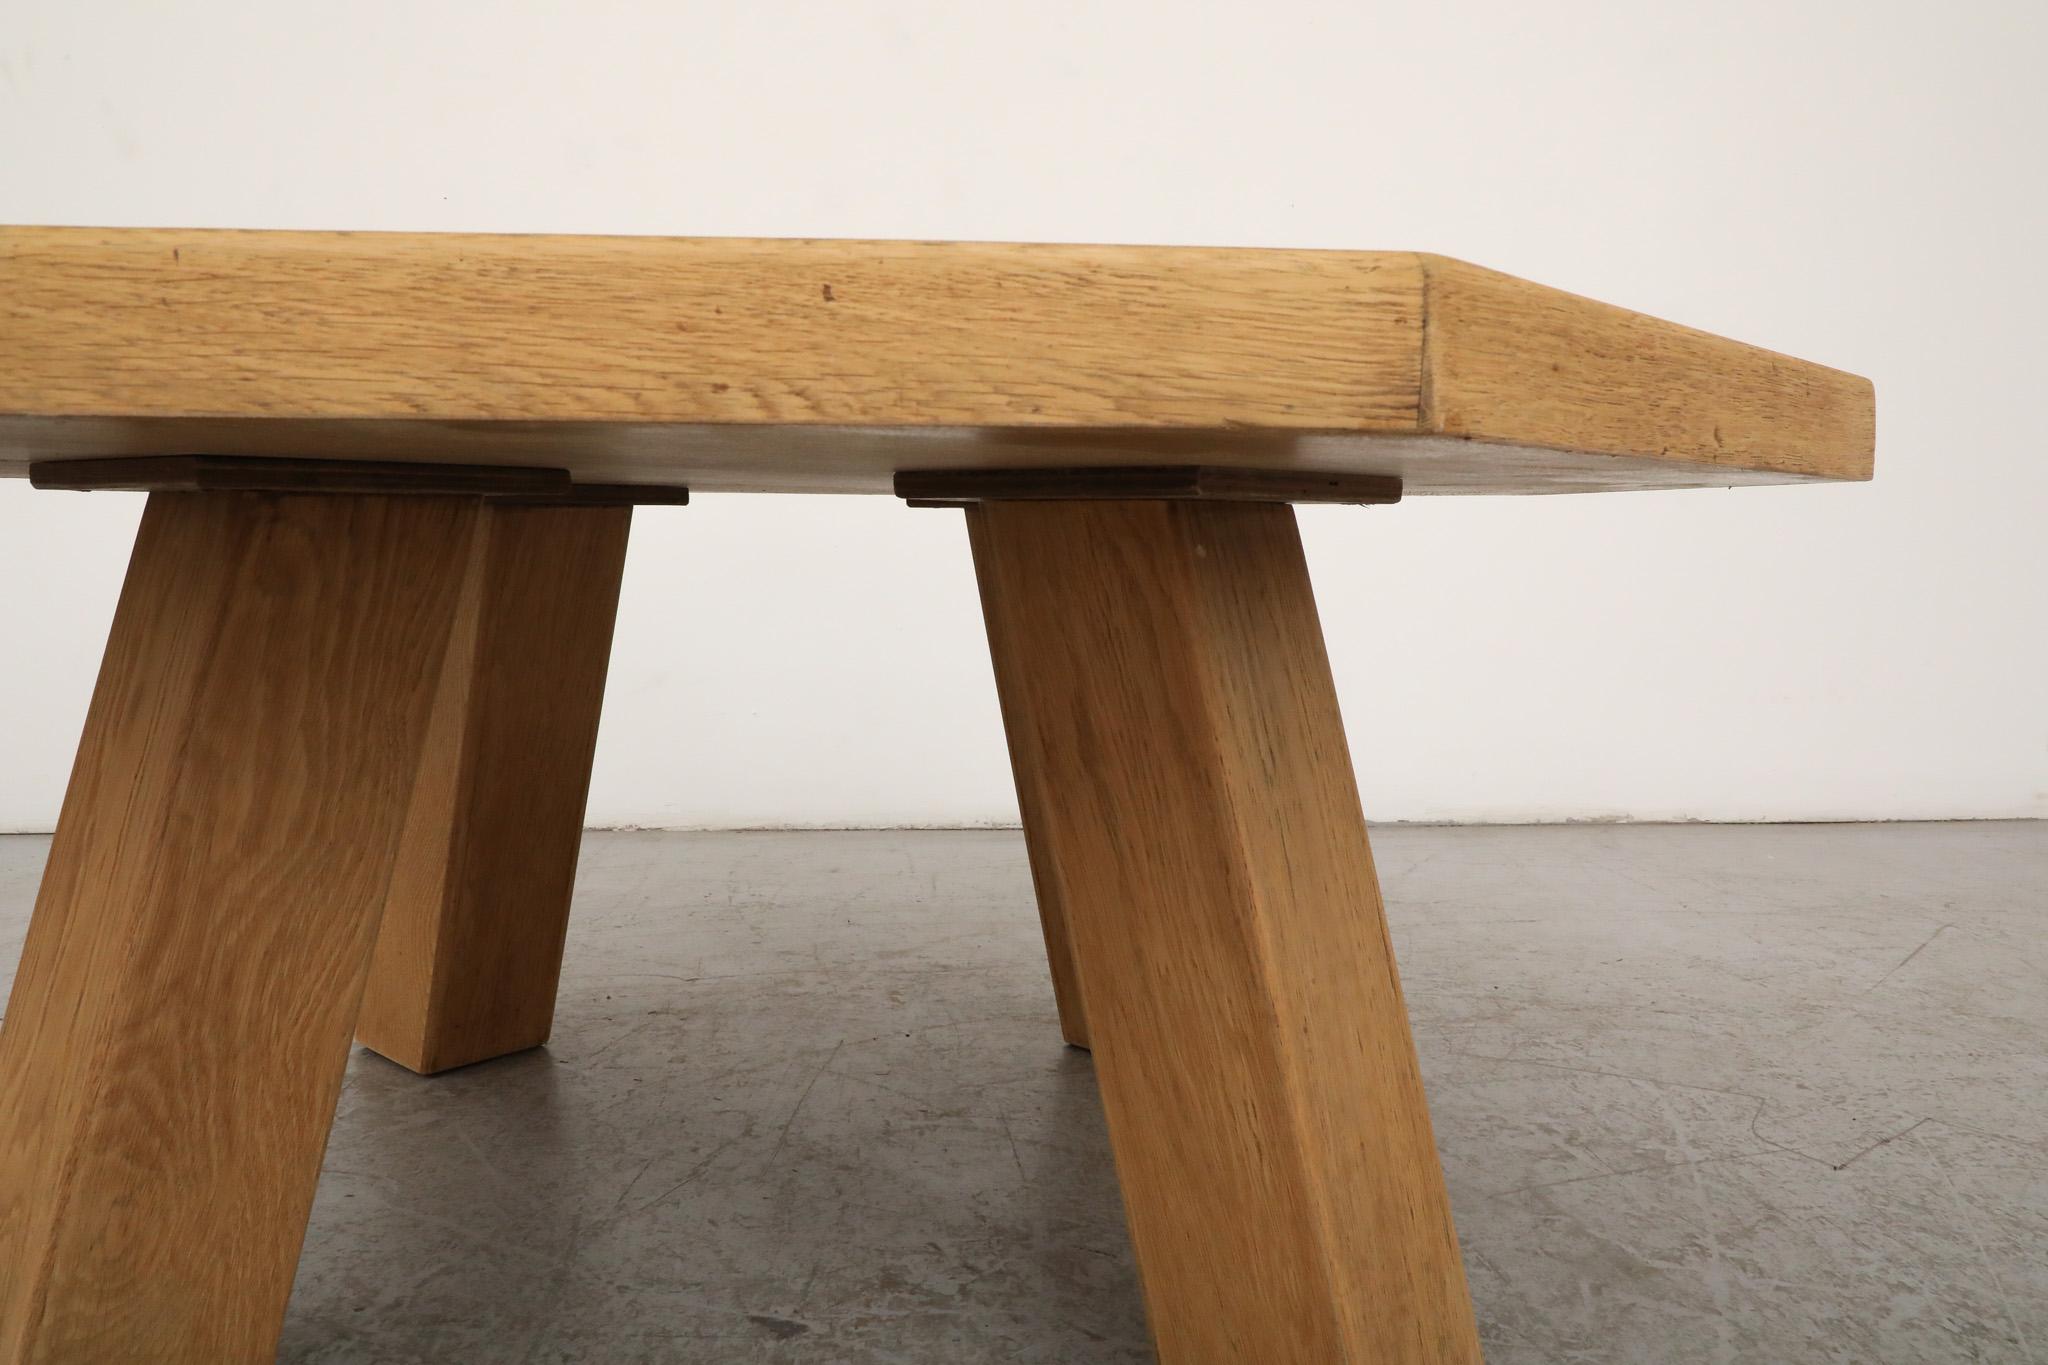 Chêne Table basse en chêne octogonale d'inspiration brutaliste Pierre Chapo